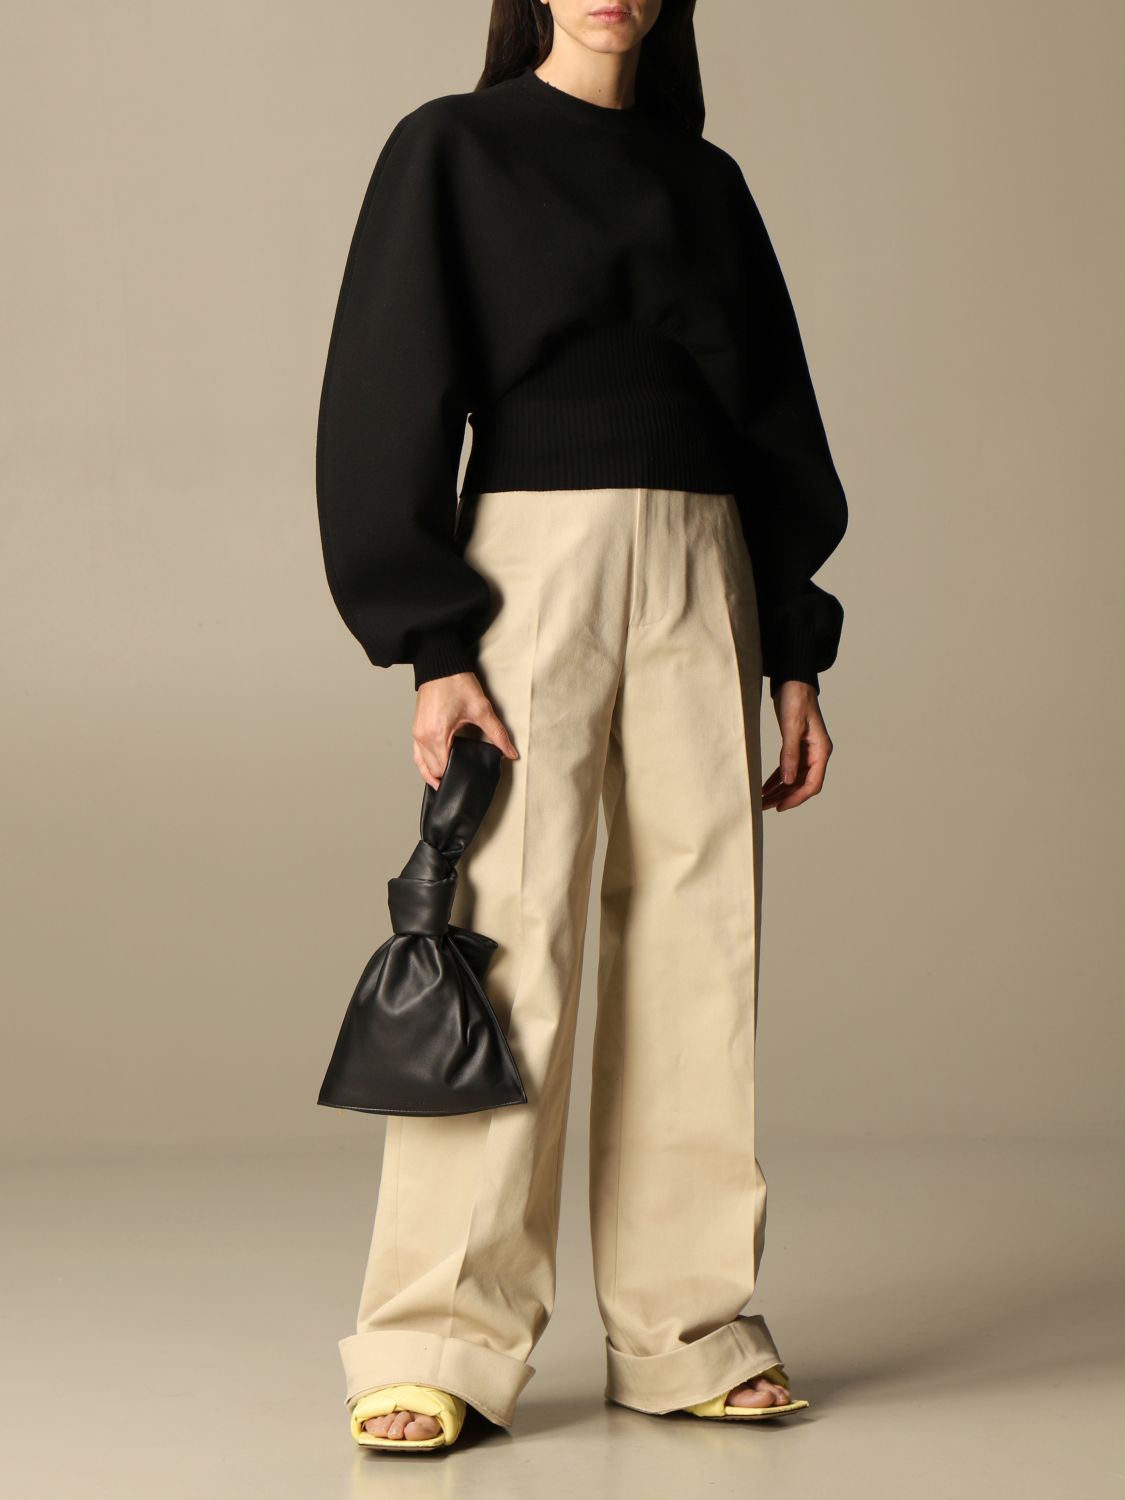 BOTTEGA VENETA: The Twist mini bag in nappa leather - Black